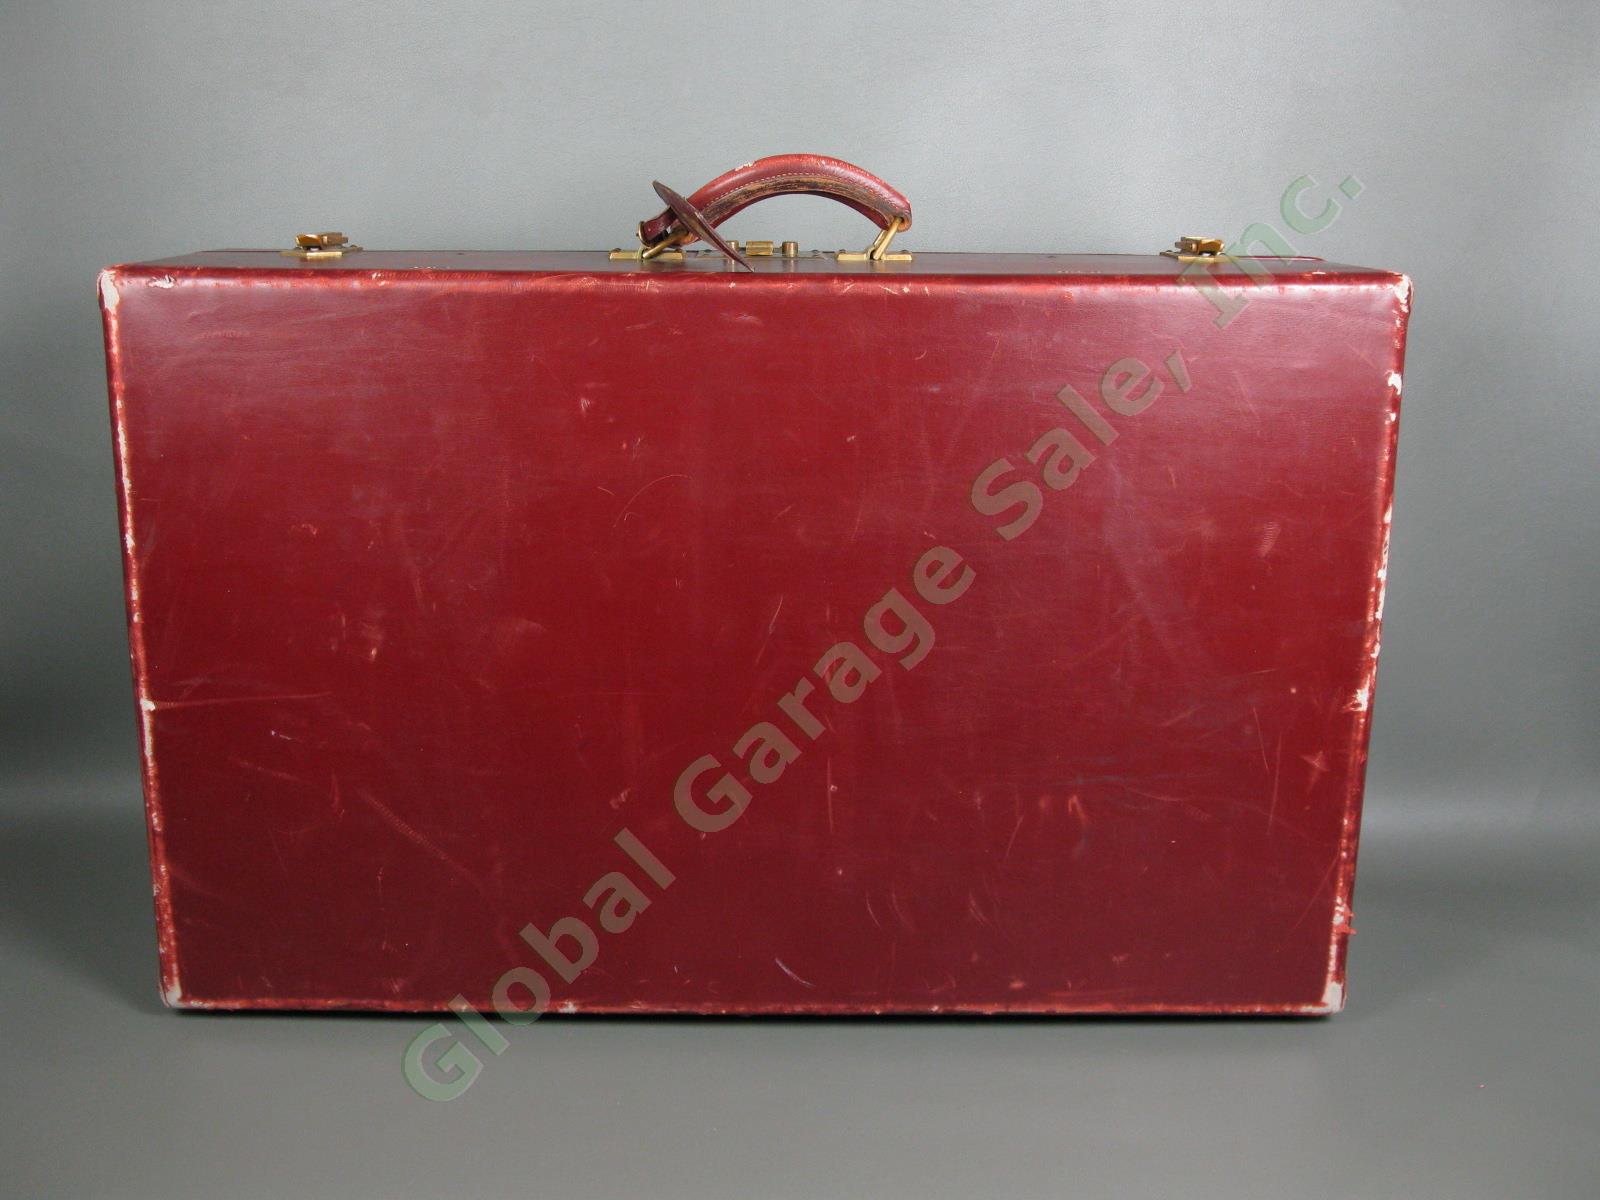 Vintage Hermes Paris Red Leather Travel Luggage Suitcase Original Brass w/ Keys 7